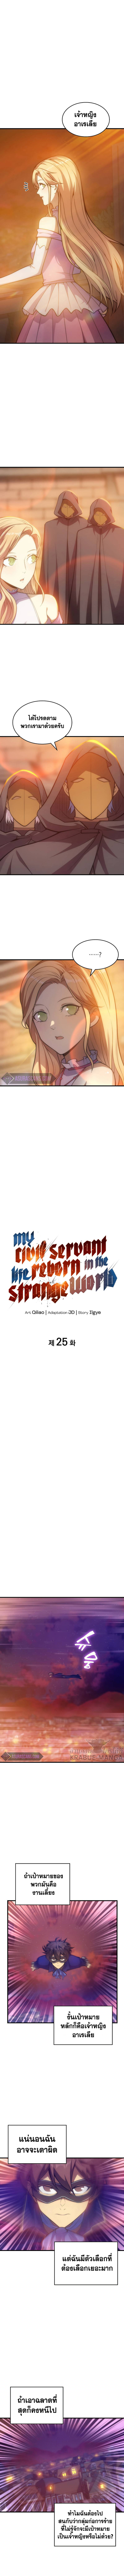 My Civil Servant Life Reborn in the Strange World25 (2)